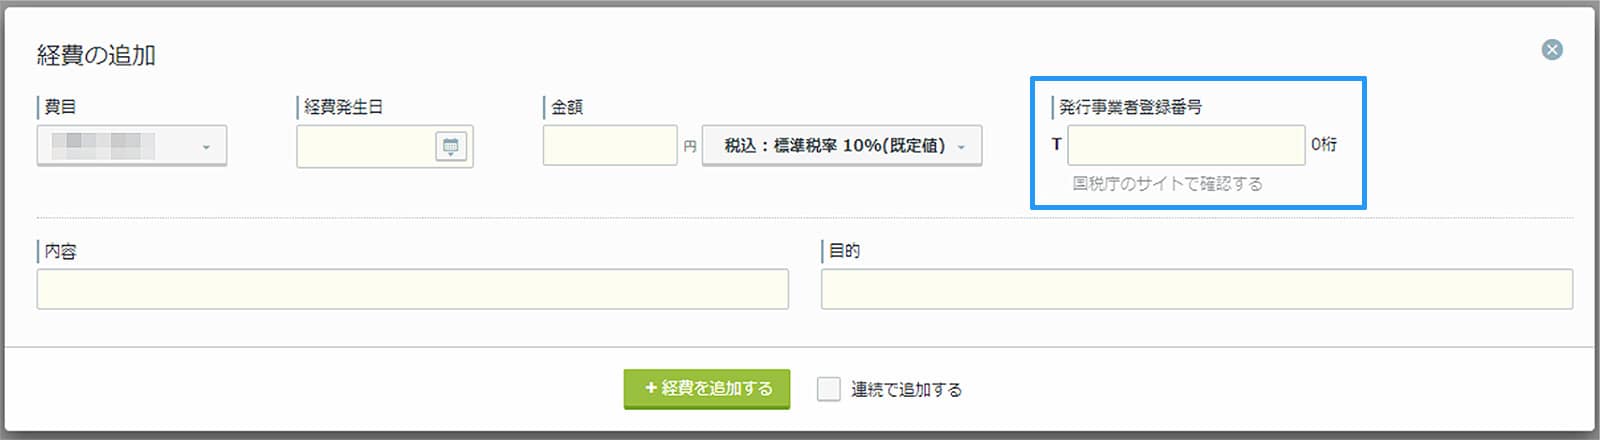 rakumo ケイヒ 経費の入力・編集画面に、発行事業者登録番号の入力欄設置が可能